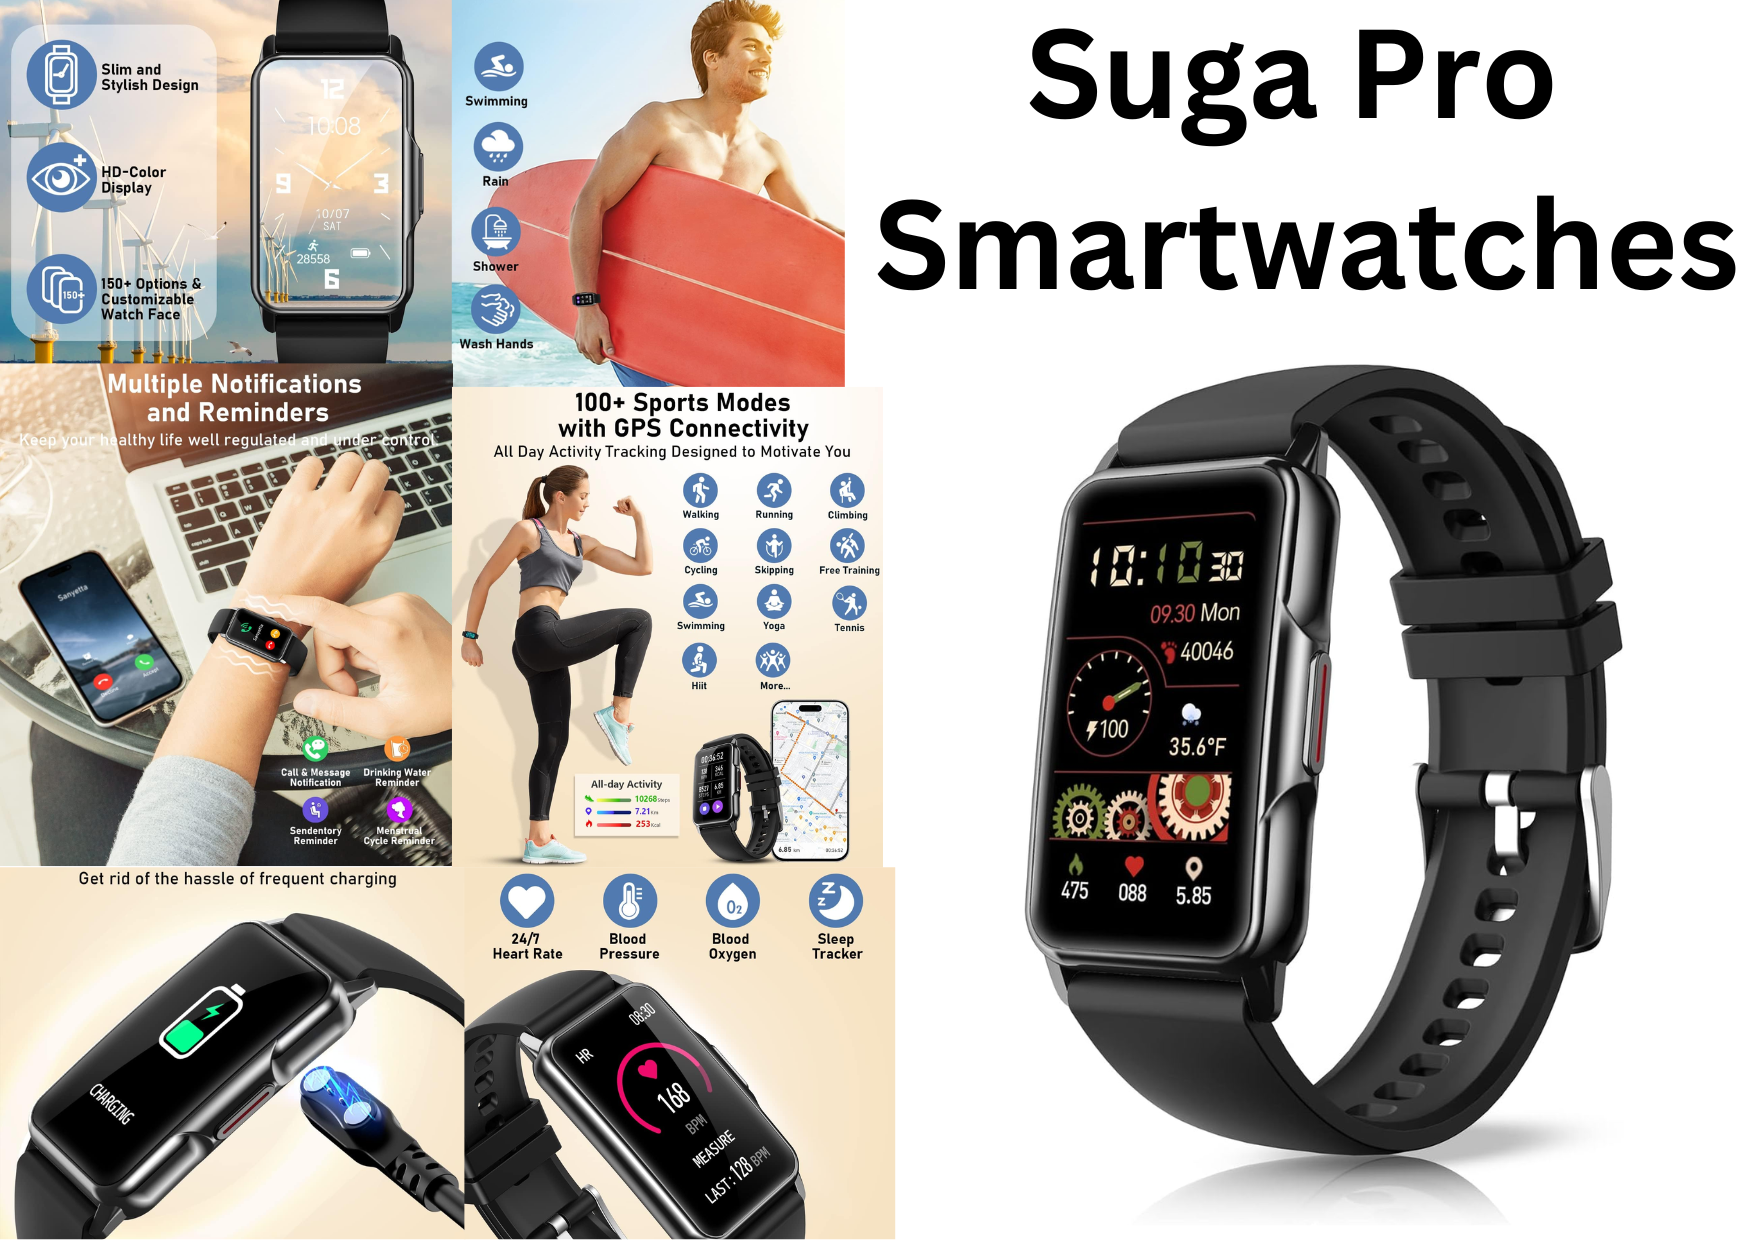 Suga Pro smartwatches